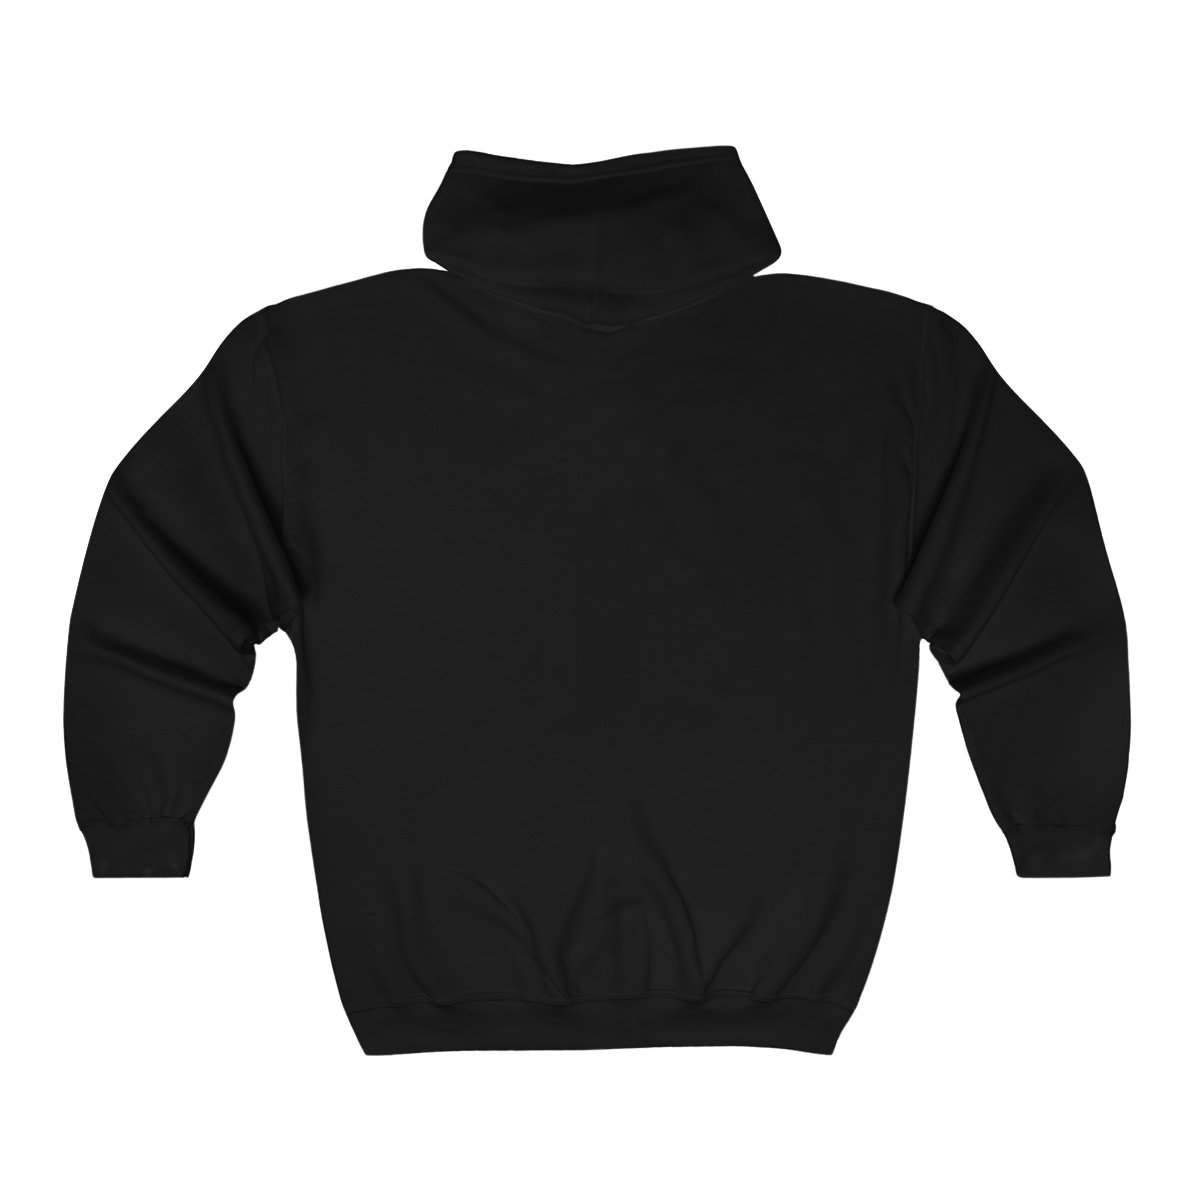 Sanctuary International – Do The Brew Full Zip Hooded Sweatshirt